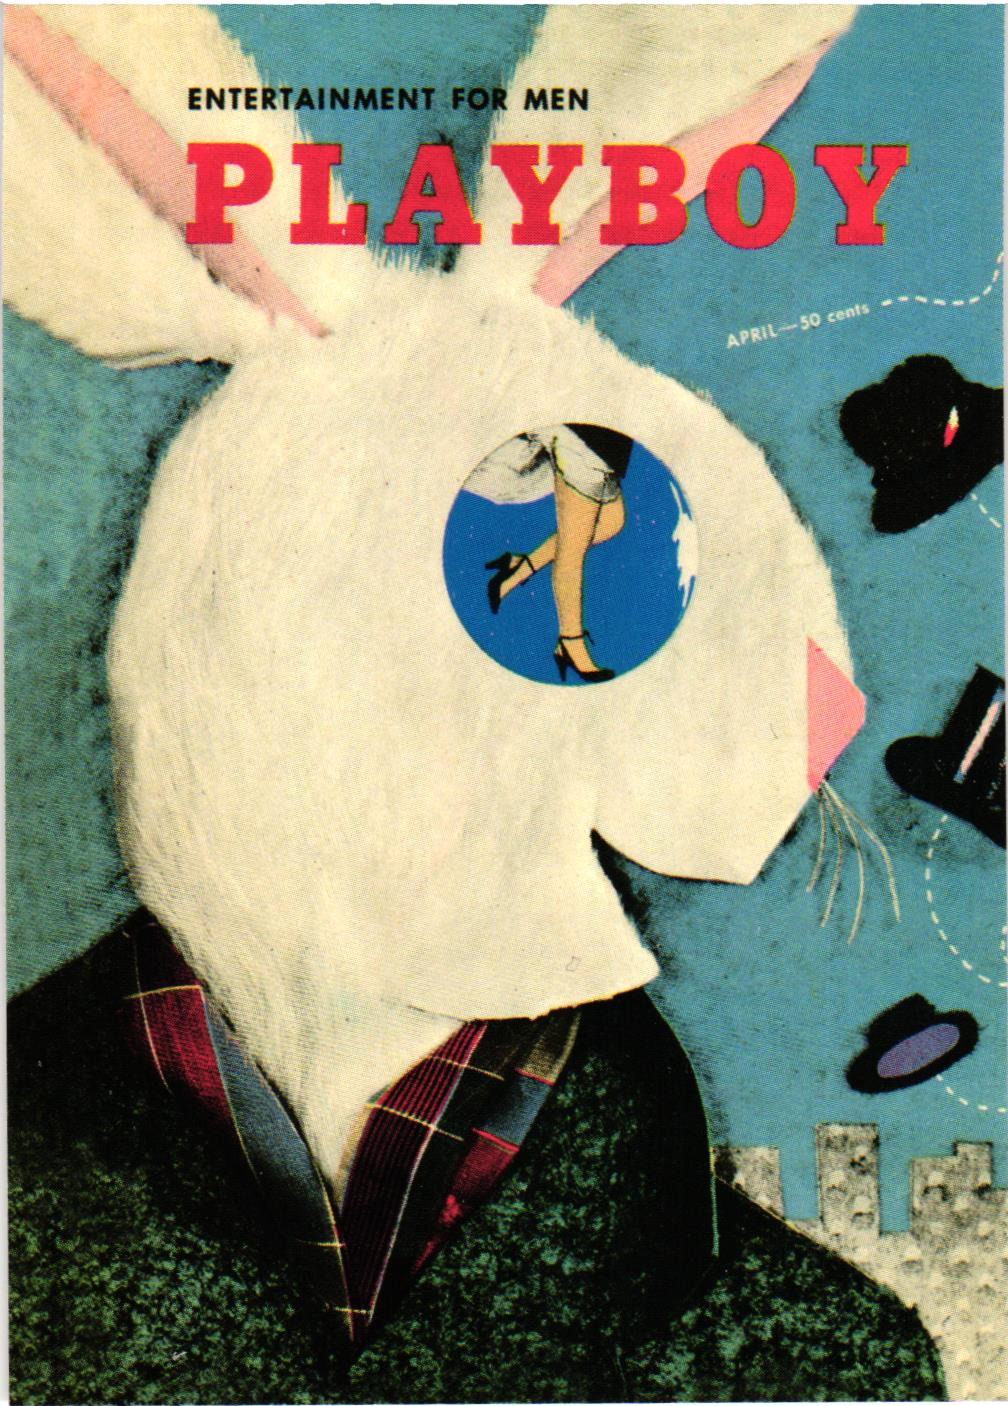 1995 Playboy APRIL Centerfold Collection (1-129) / U Pick Cards / Buy4+ Save25%